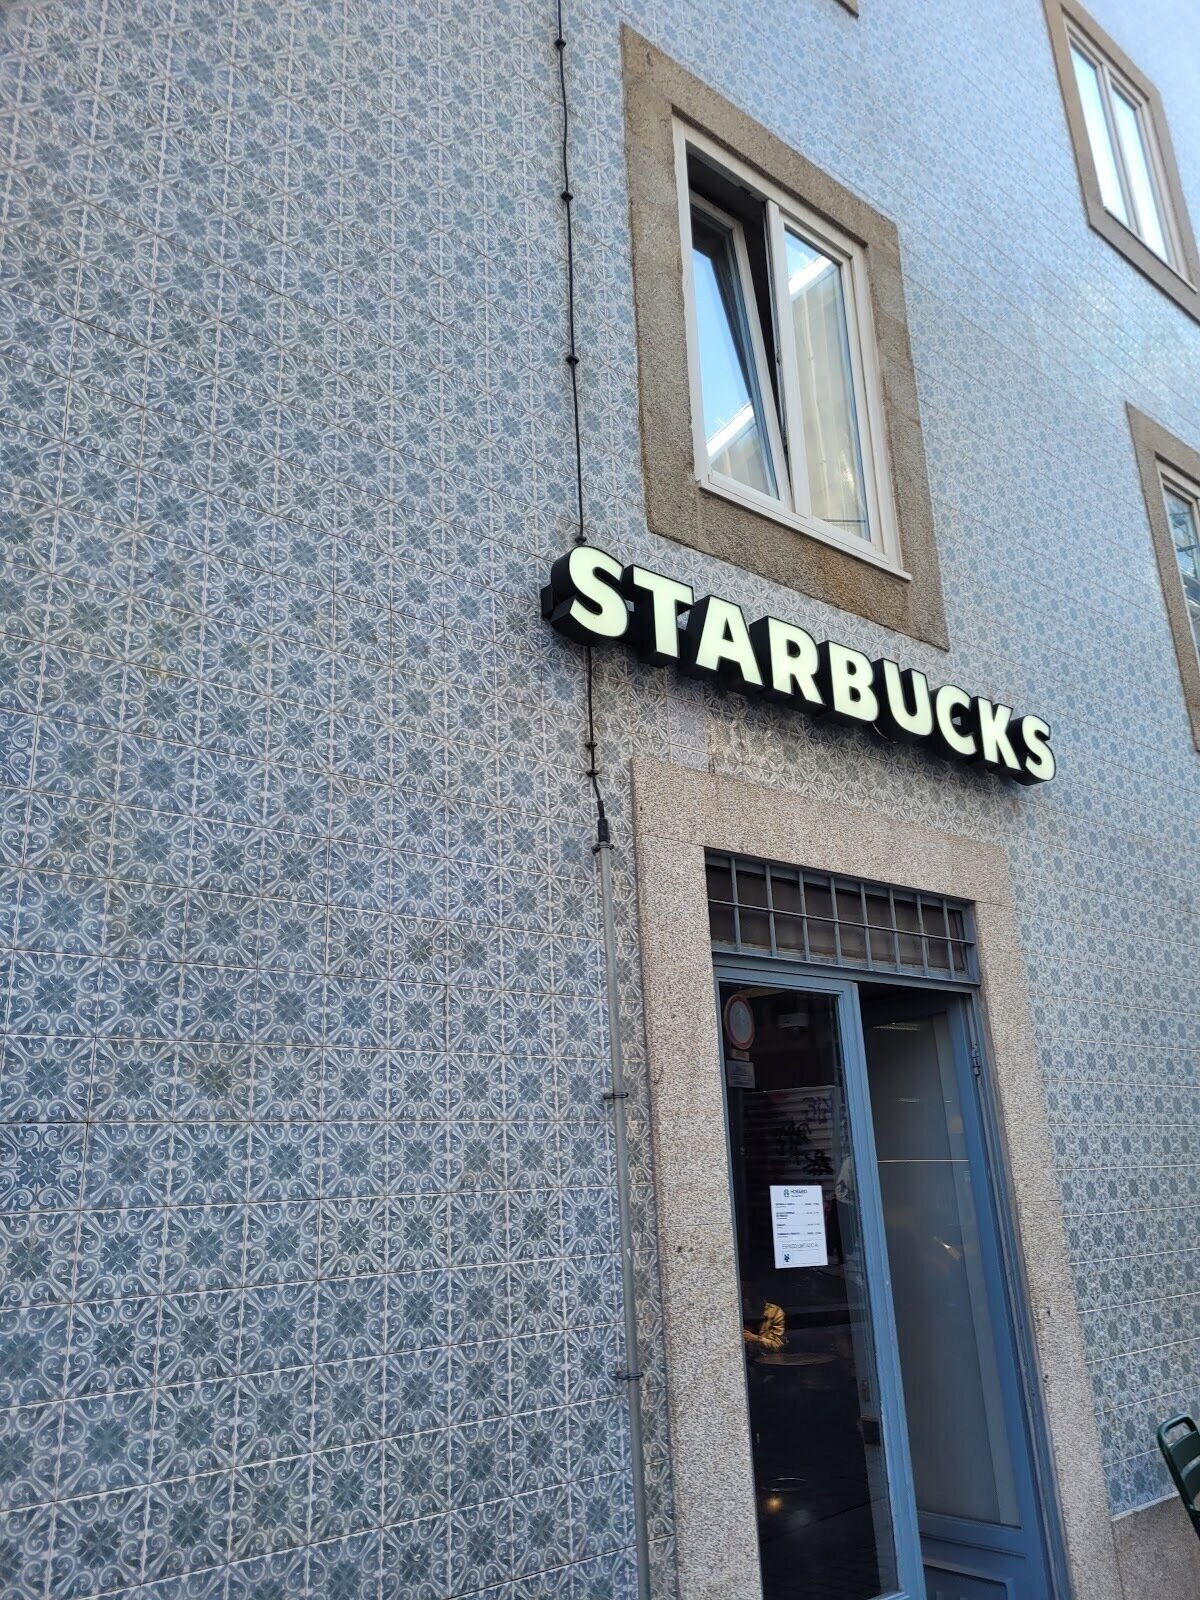 <span class="translation_missing" title="translation missing: en.meta.location_title, location_name: Starbucks @ Rua dos Clérigos 73, city: Porto">Location Title</span>